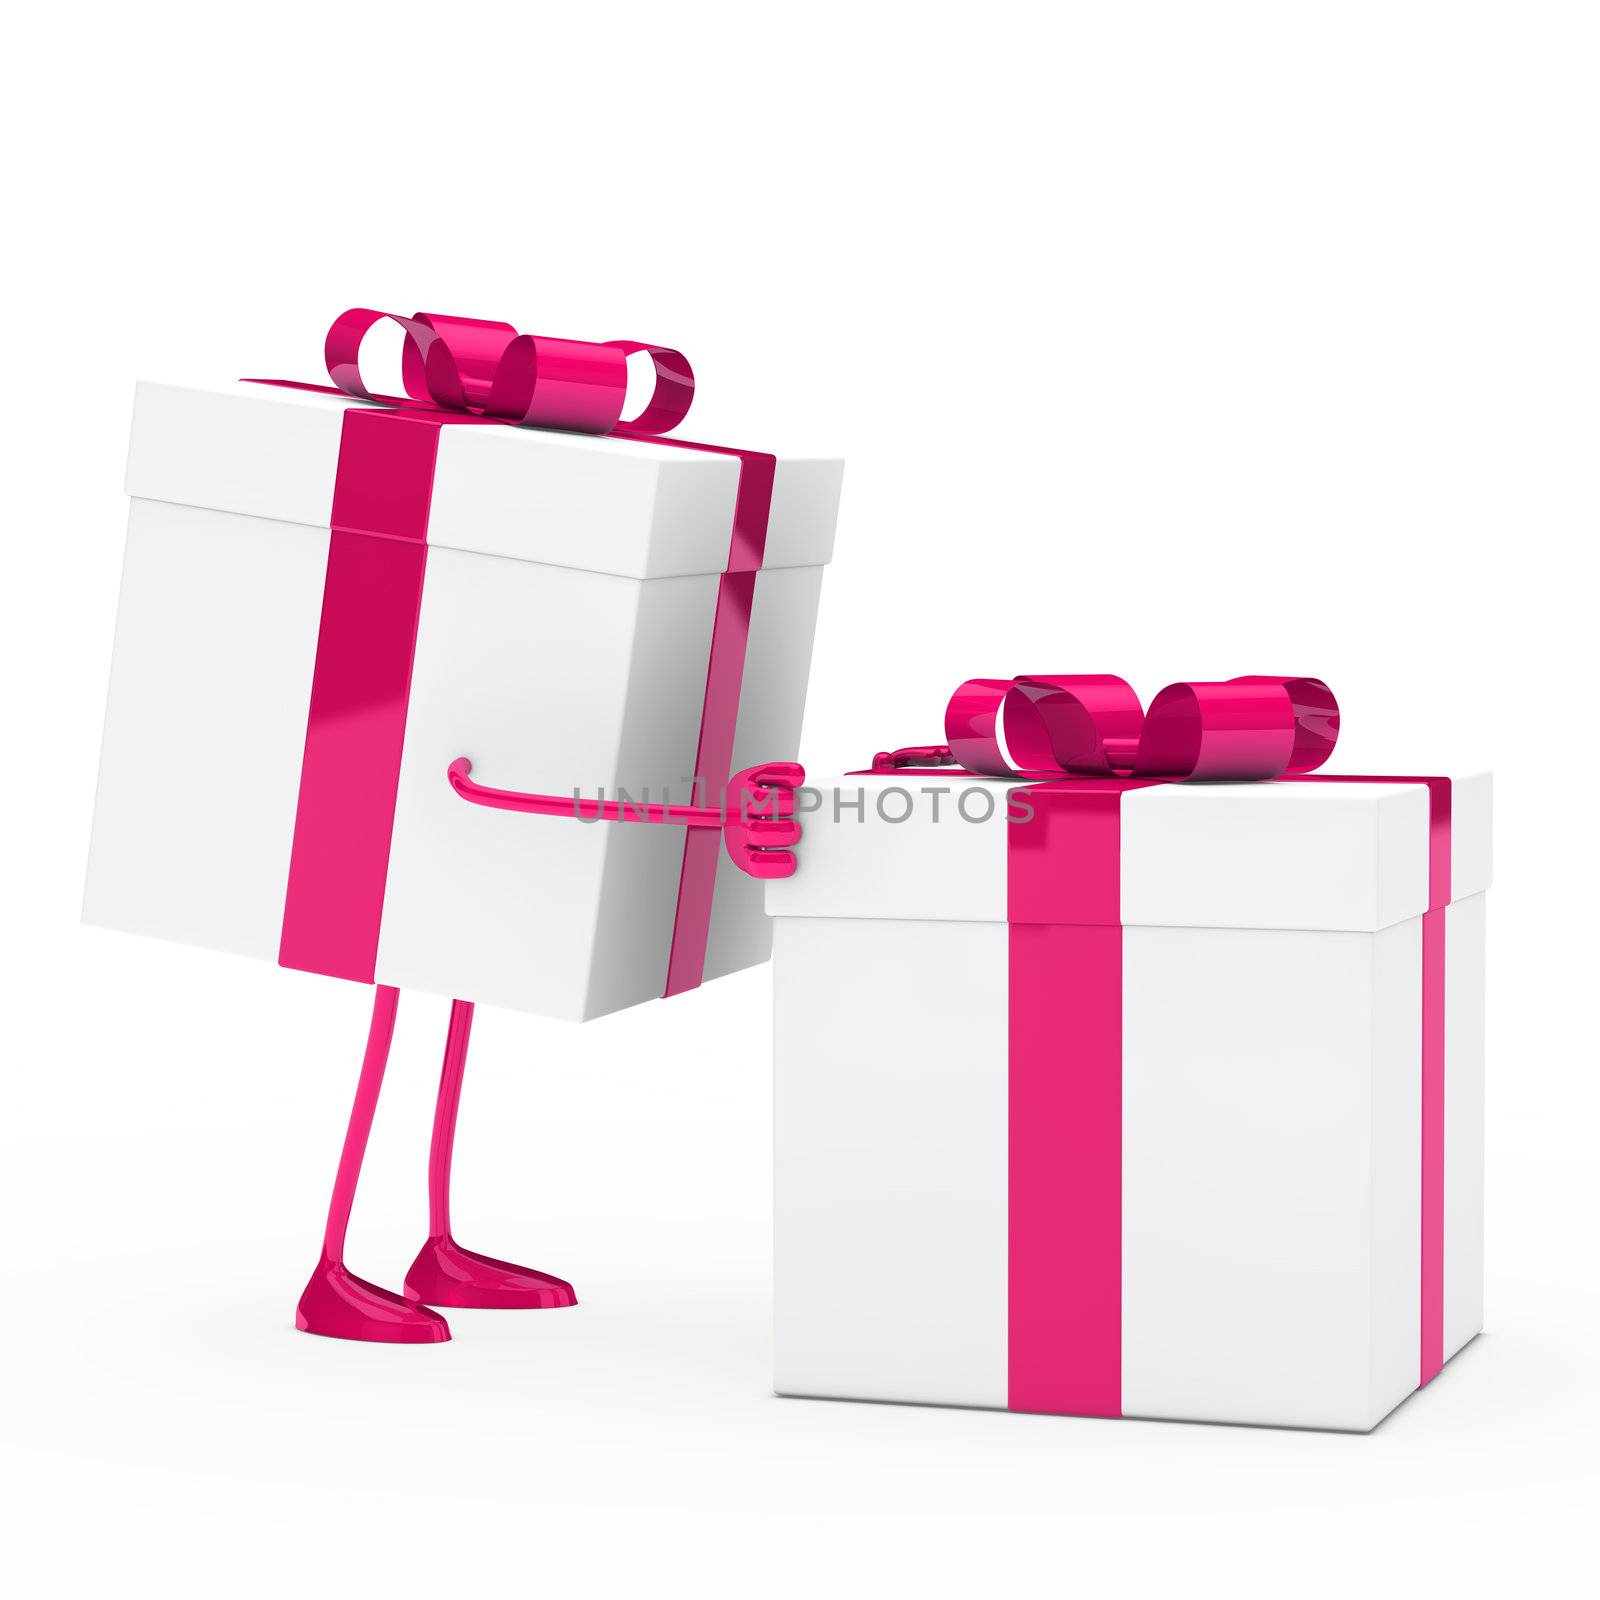 christmas pink white figure push gift box